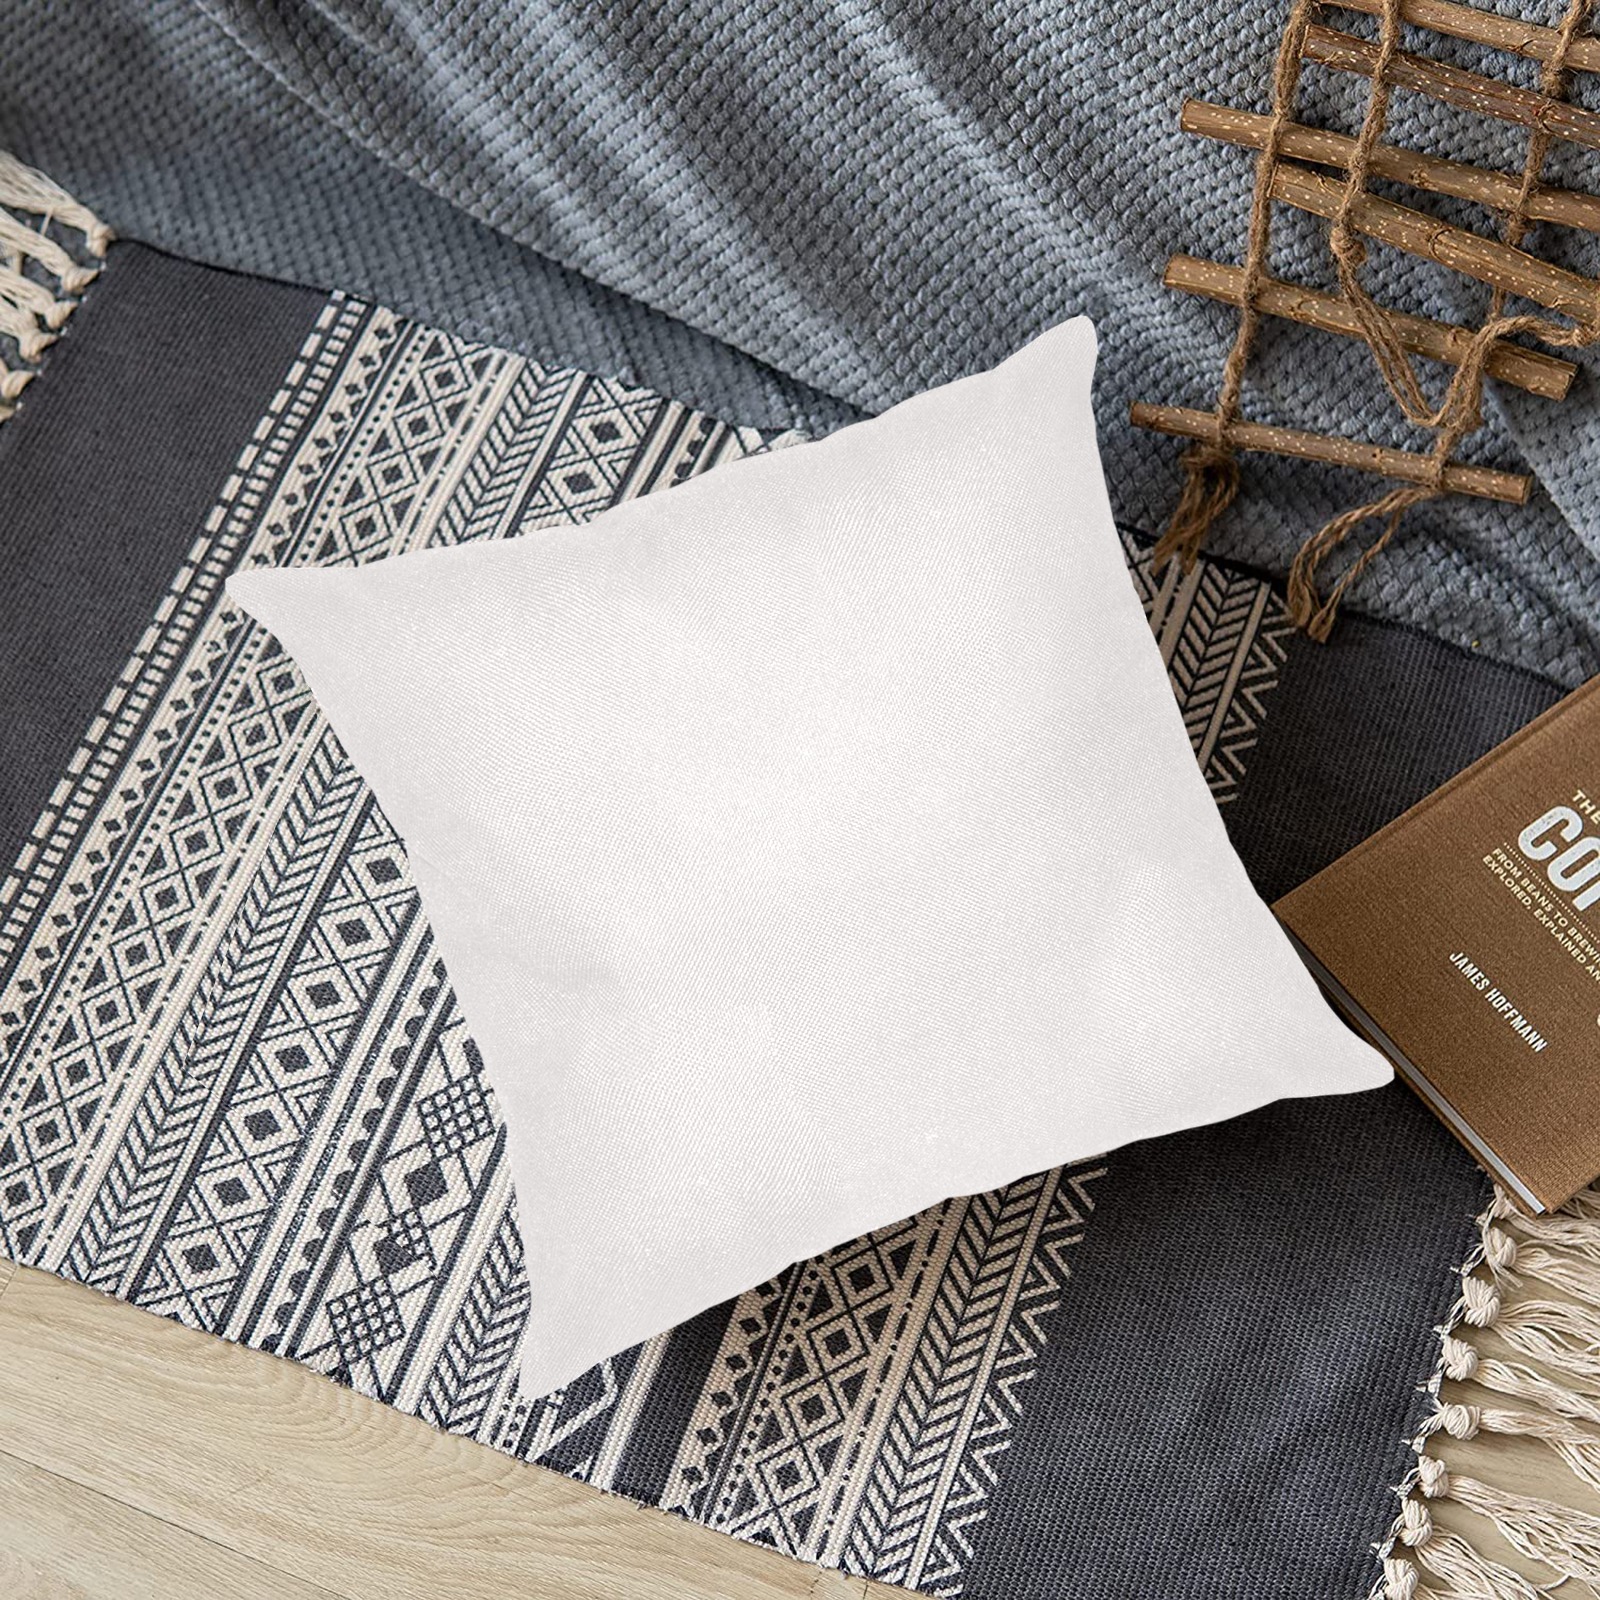 Linen Zippered Pillowcase 18"x18"(Two Sides)